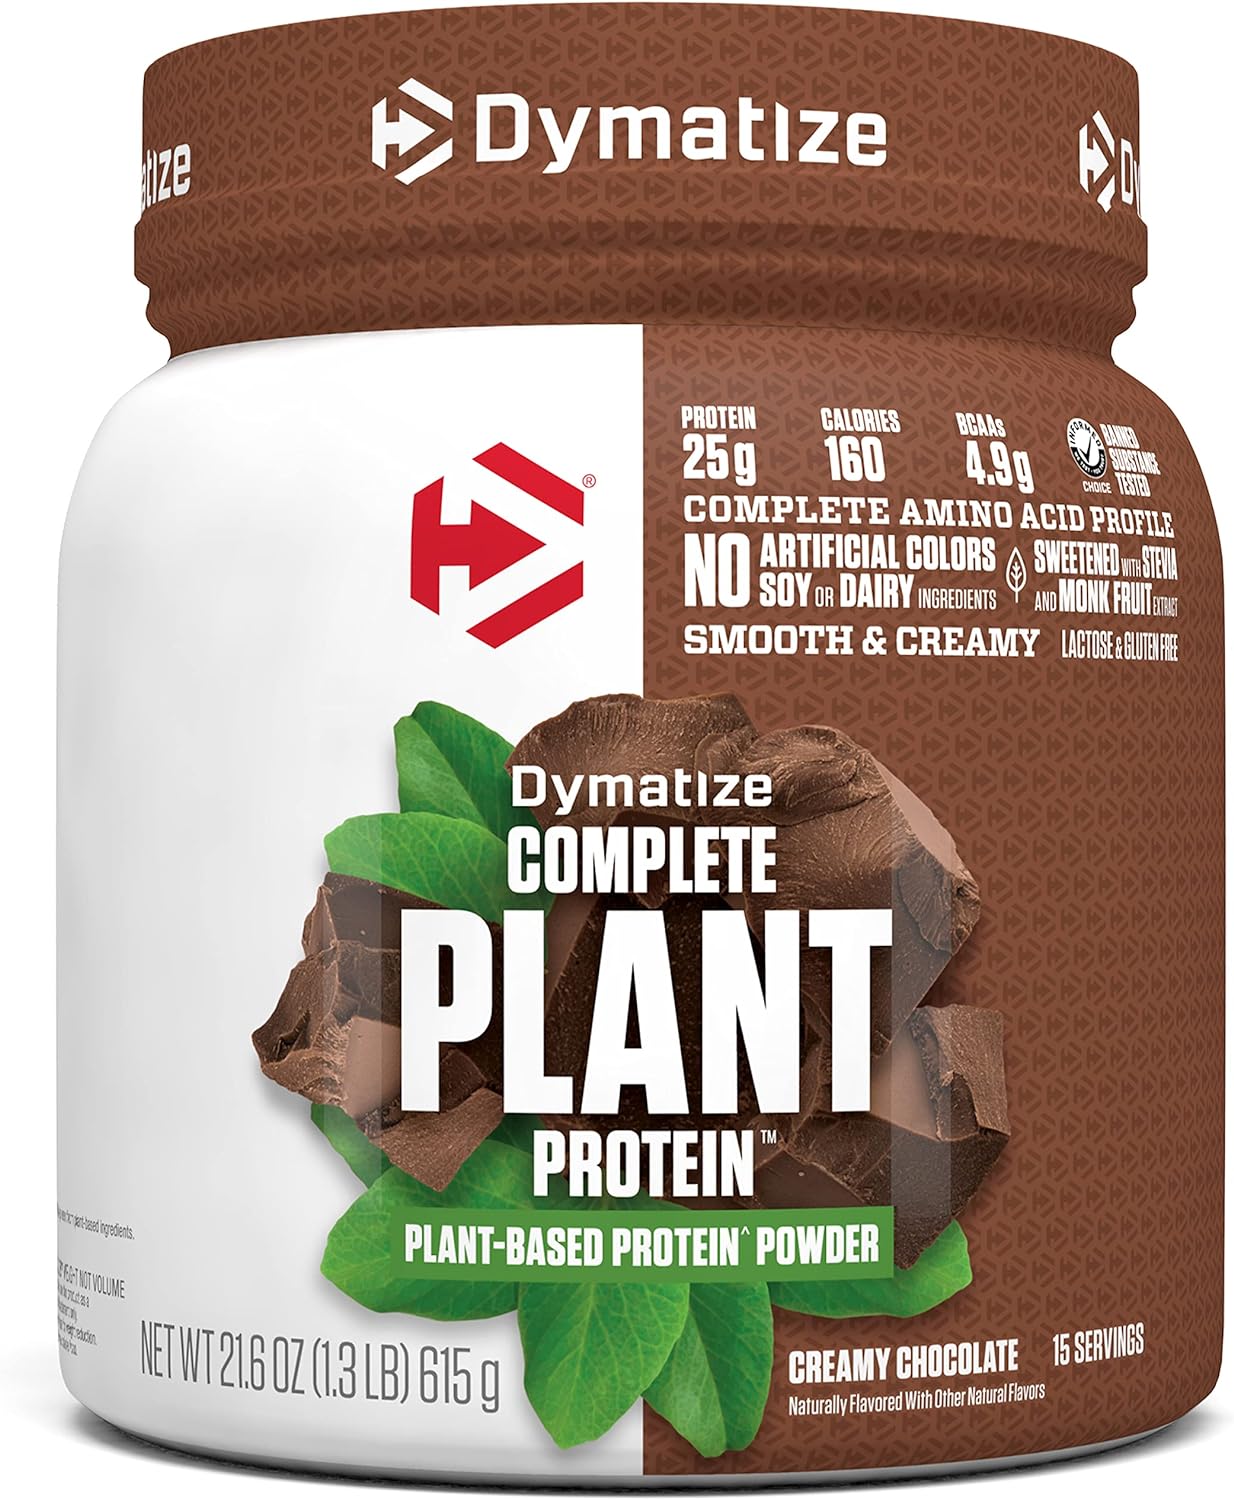 Dymatize Vegan Plant Protein, Creamy Chocolate, 25g Protein, 4.8g BCAA